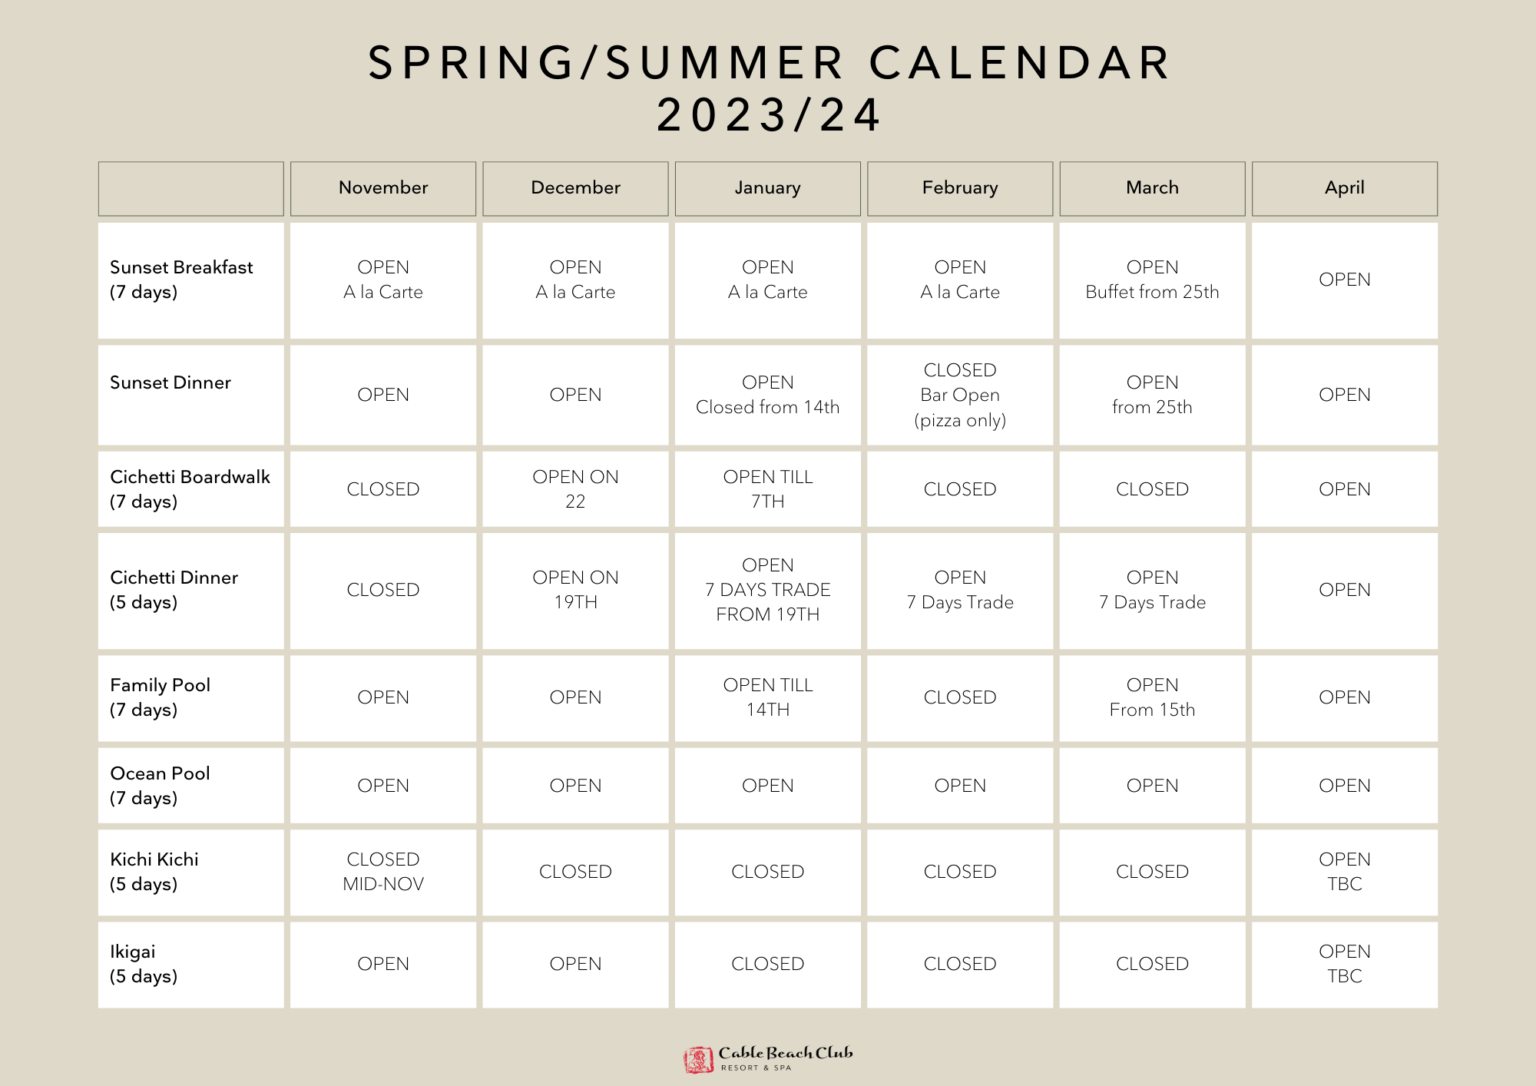 SpringSummer Calendar 2324 4